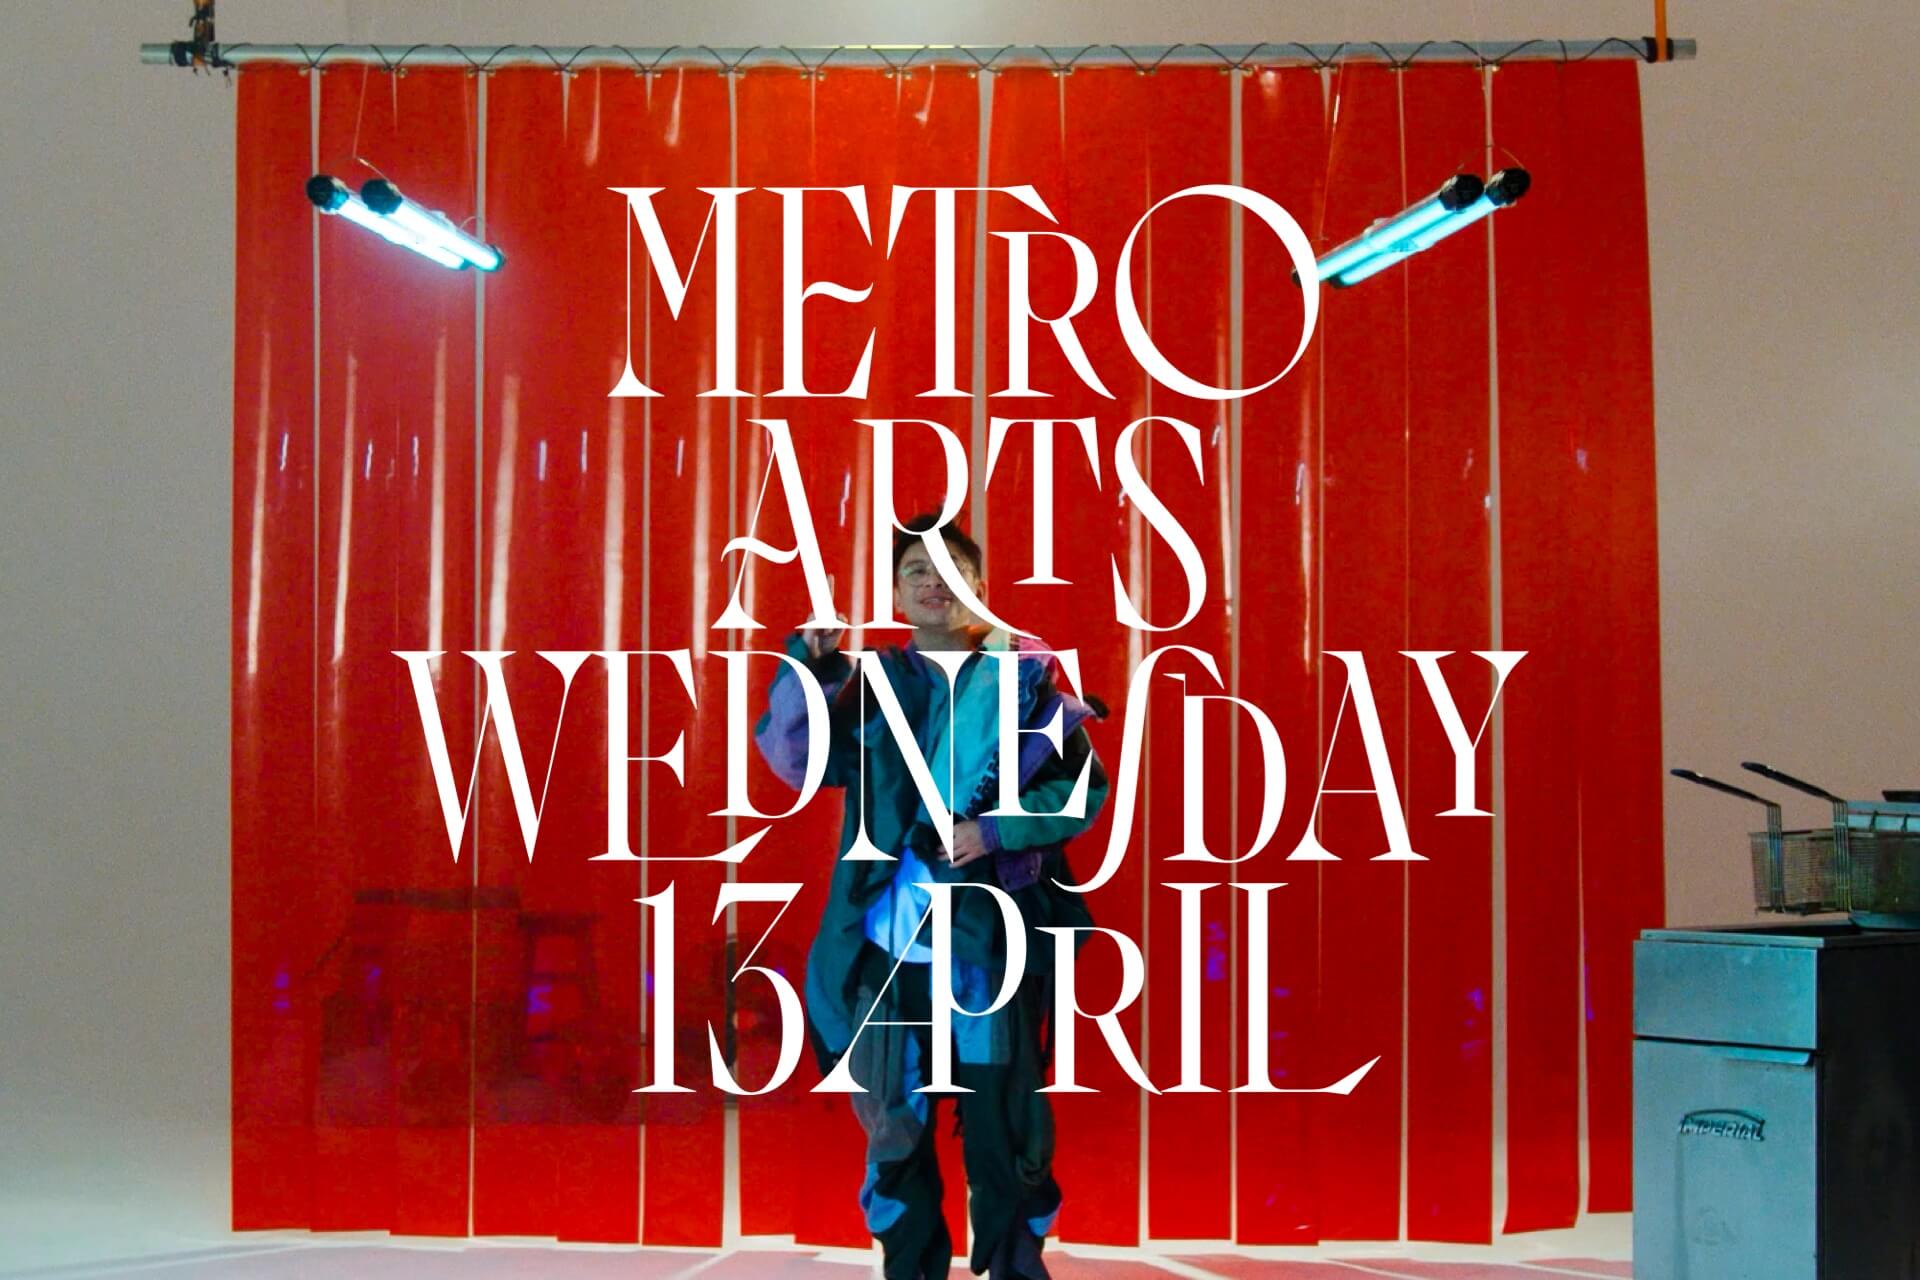 Metro Arts — Wednesday 13 April